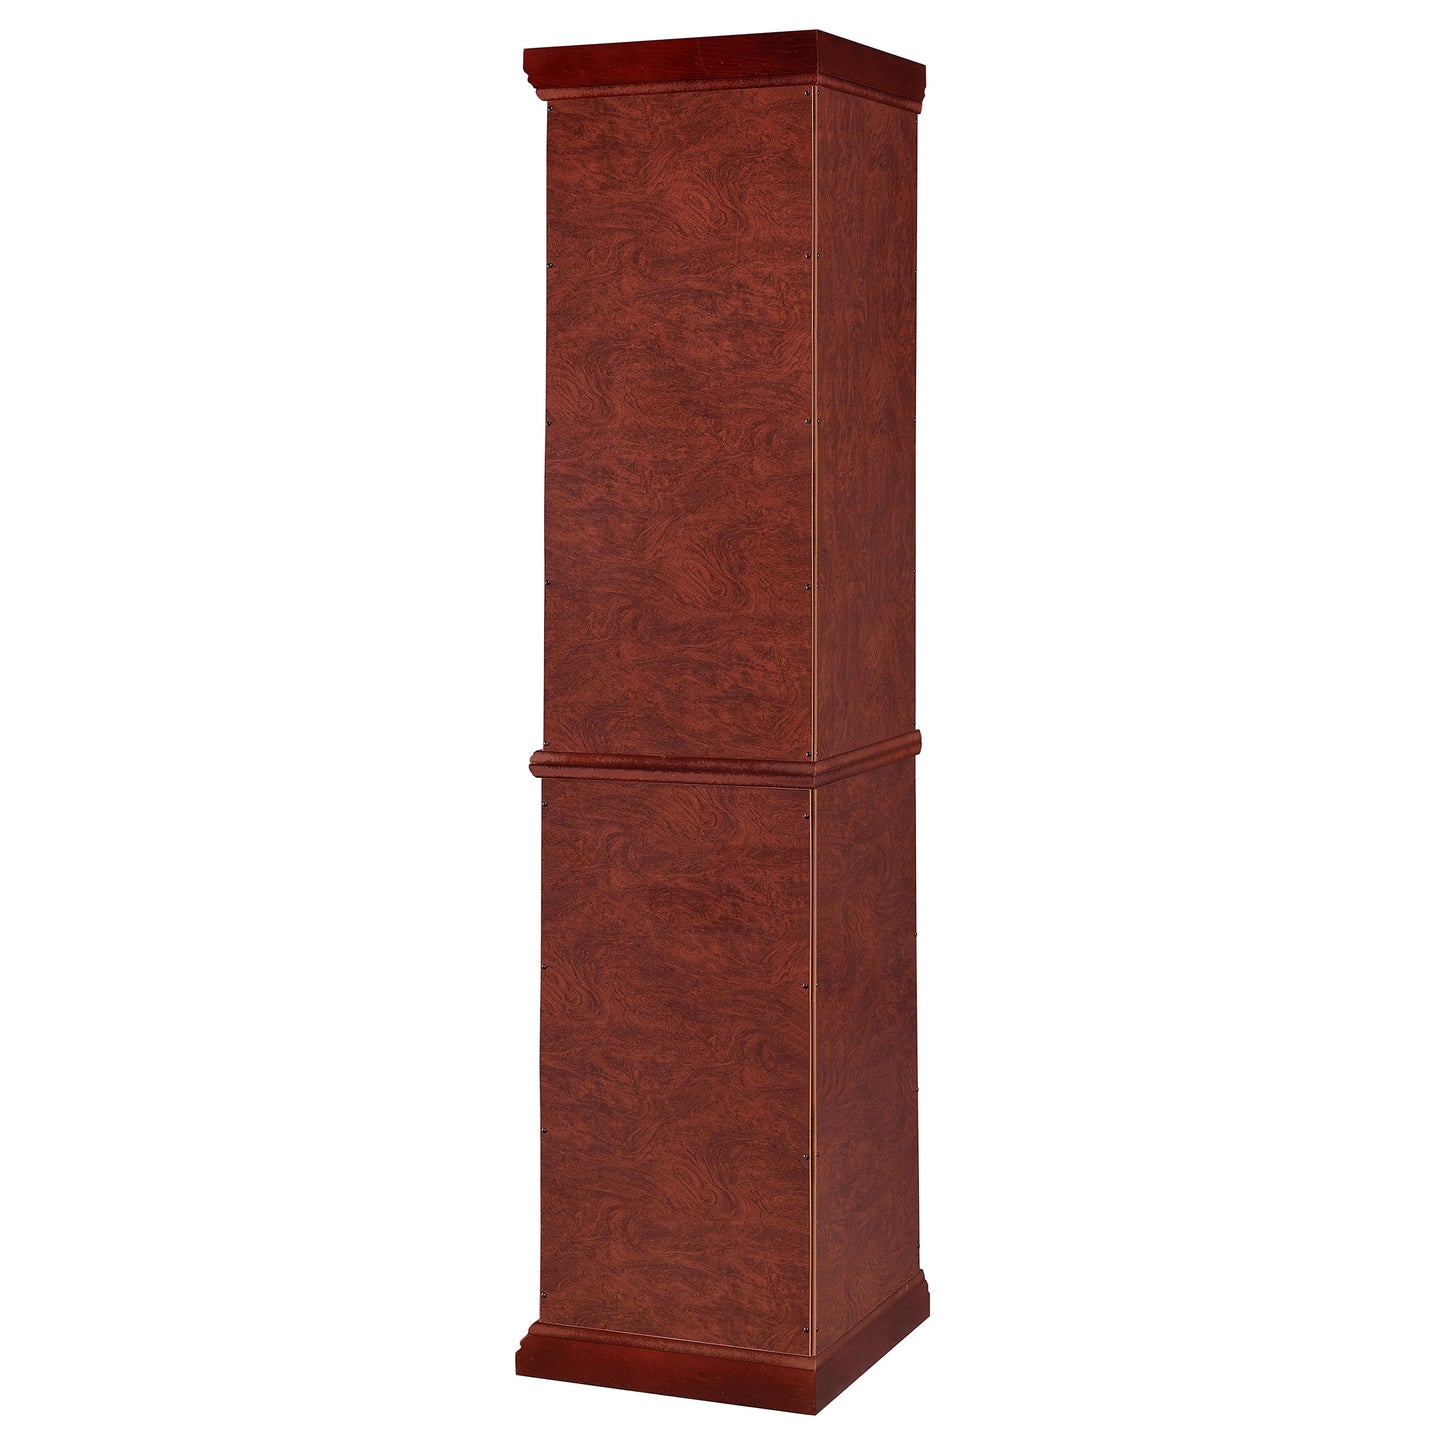 Appledale 6-shelf Corner Curio Display Cabinet Medium Brown